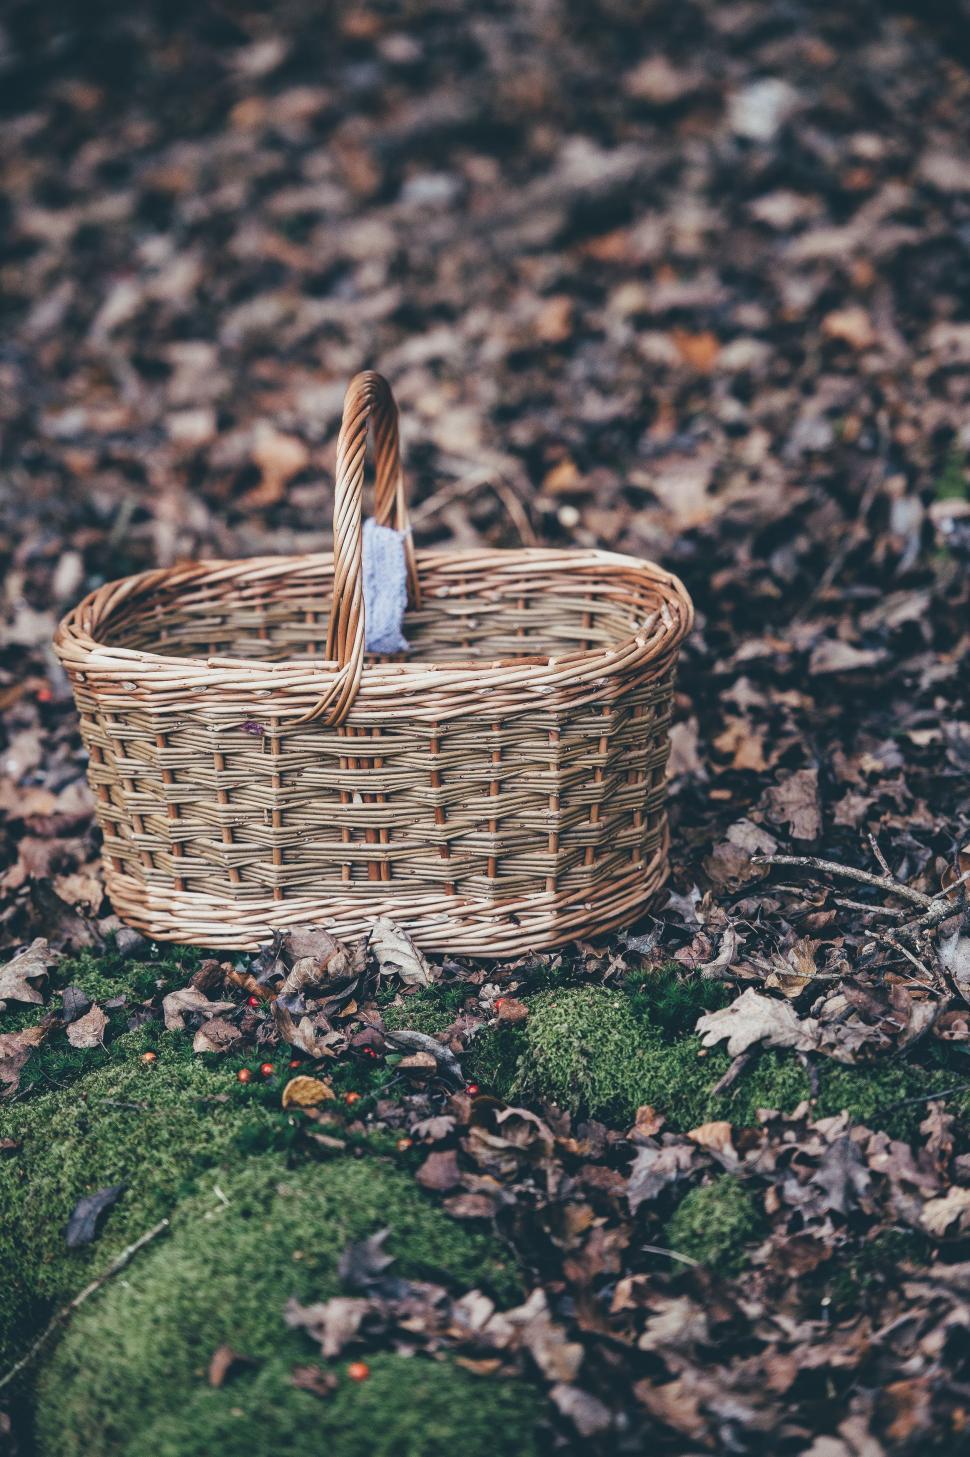 Free Image of Wicker Basket in Forest 